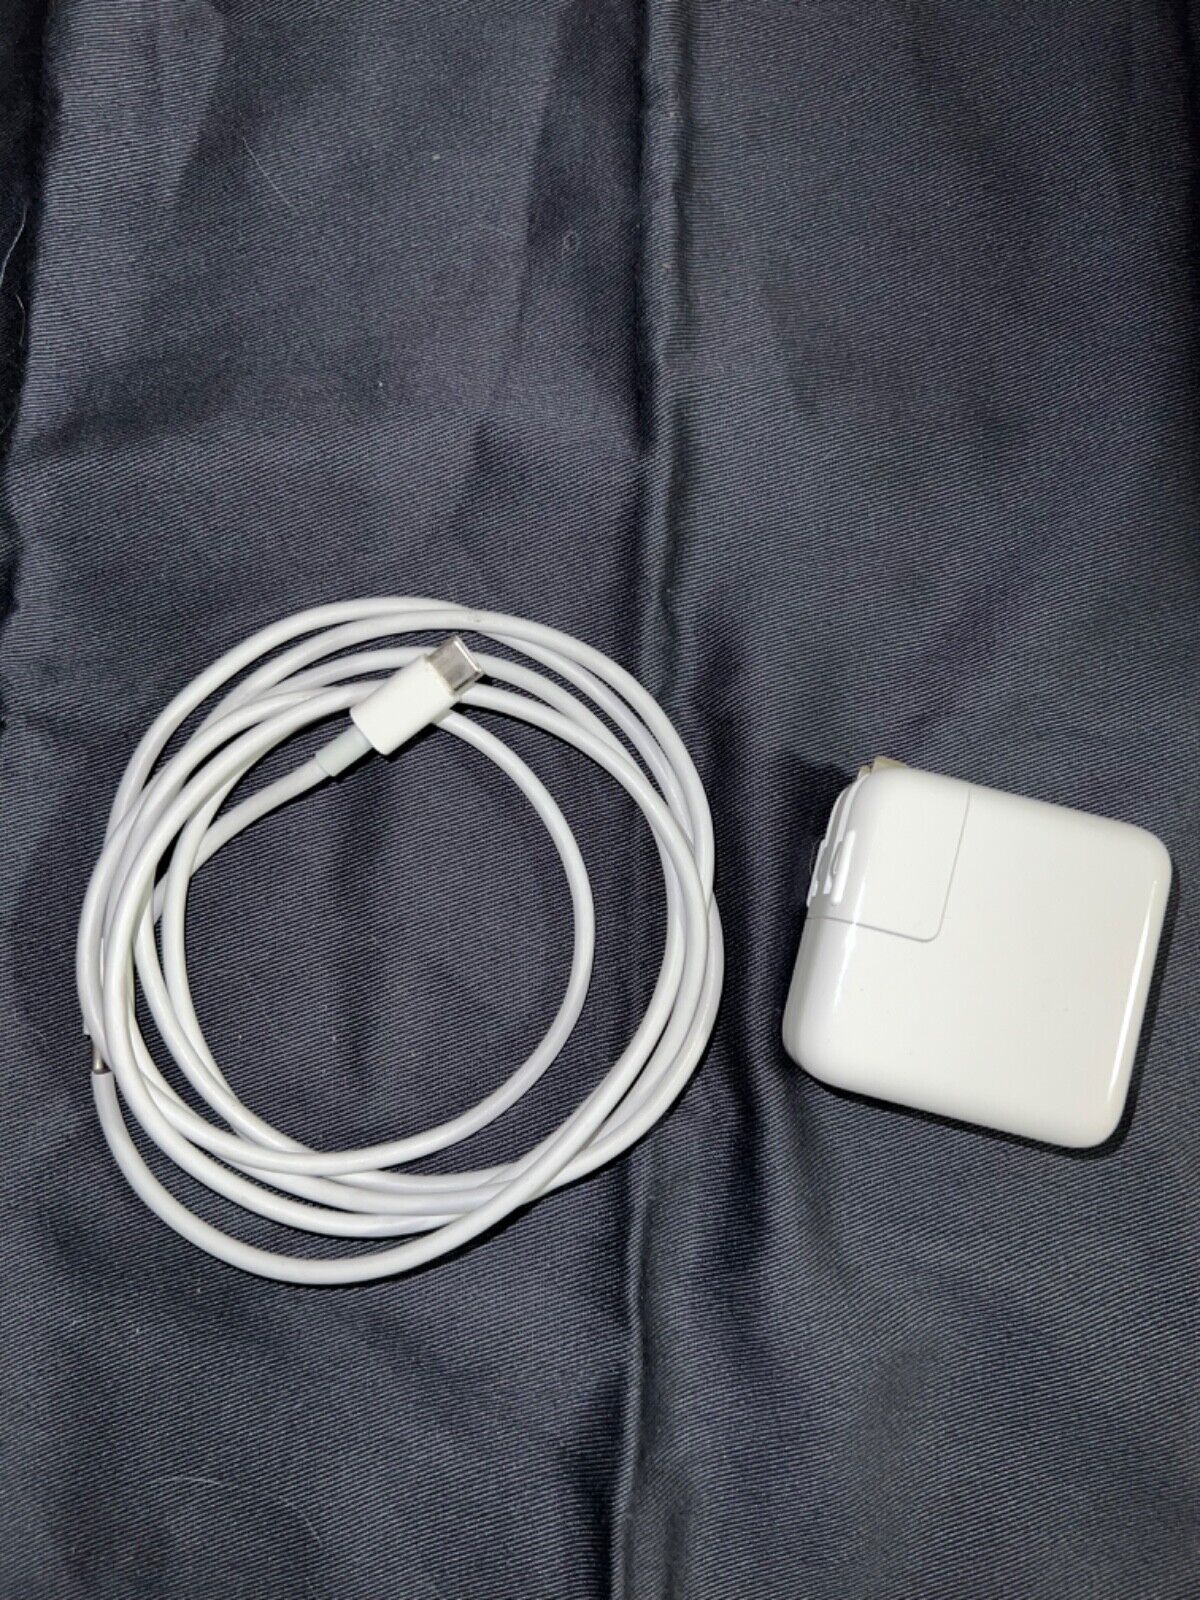 Apple 30W Usb-C Power Adapter Model#:A2164 + 6 foot UsbC to UsbC cord